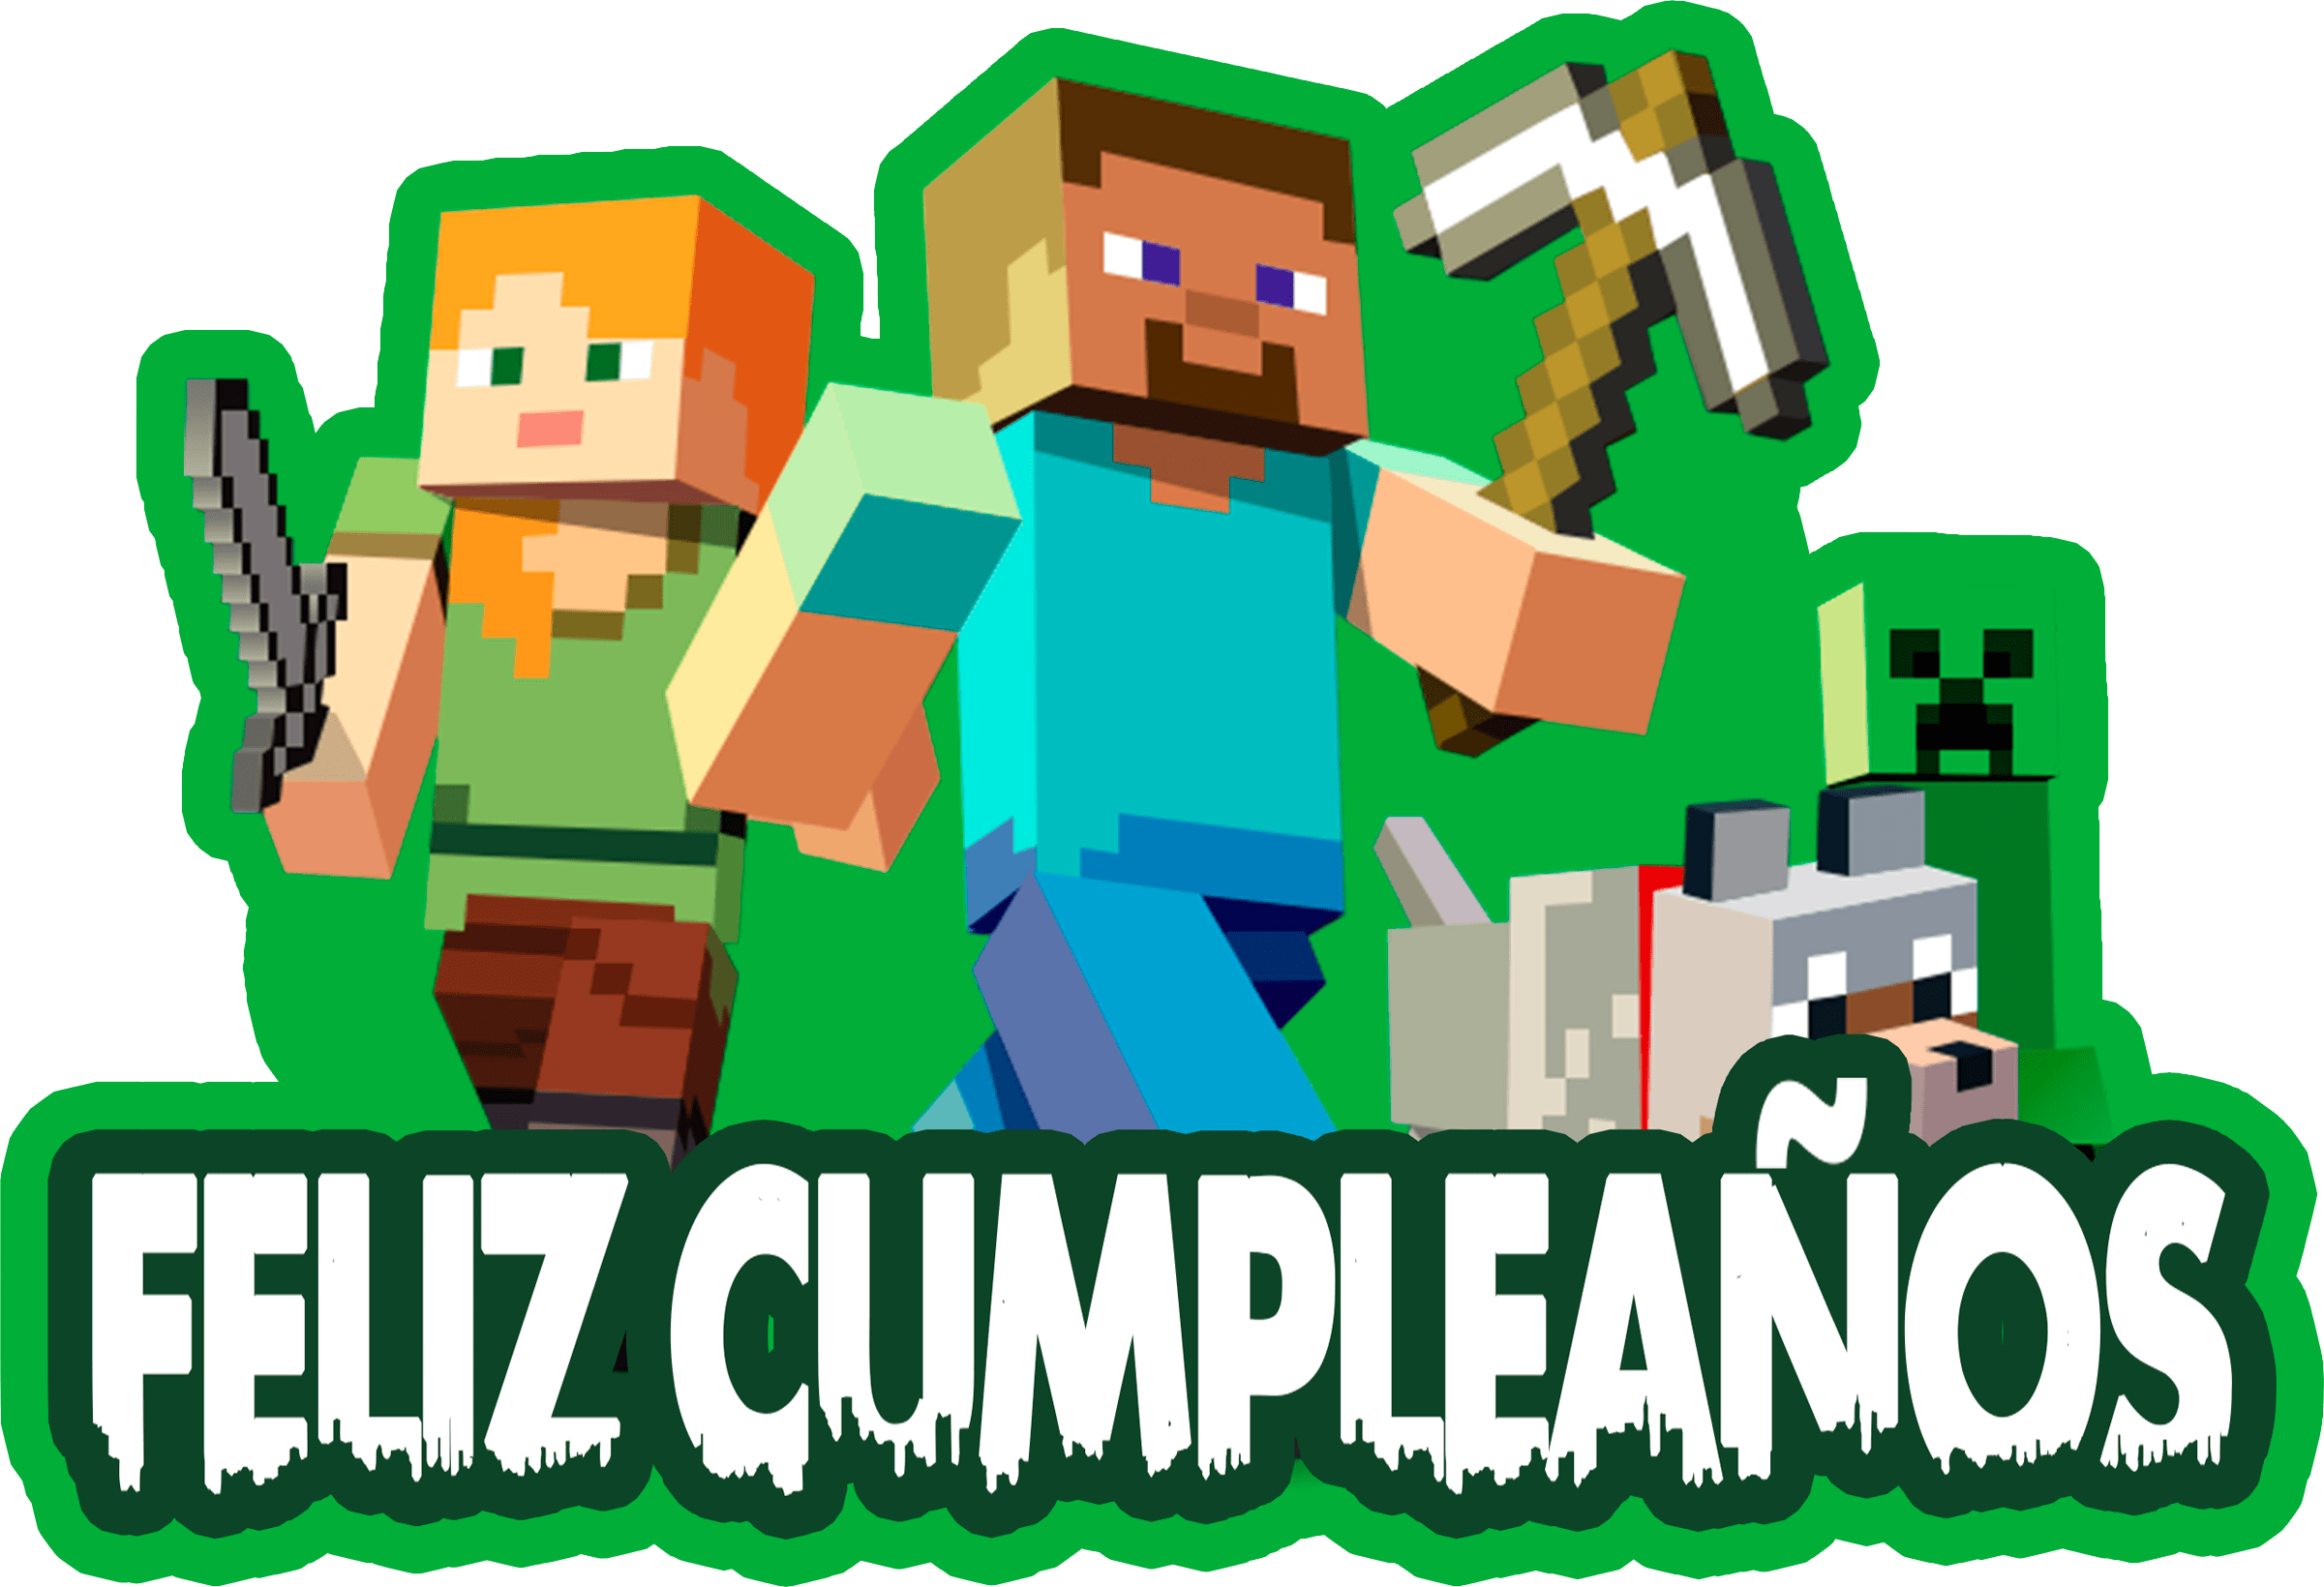 Minecraft Birthday Decoration: Ideas and Free Downloads 